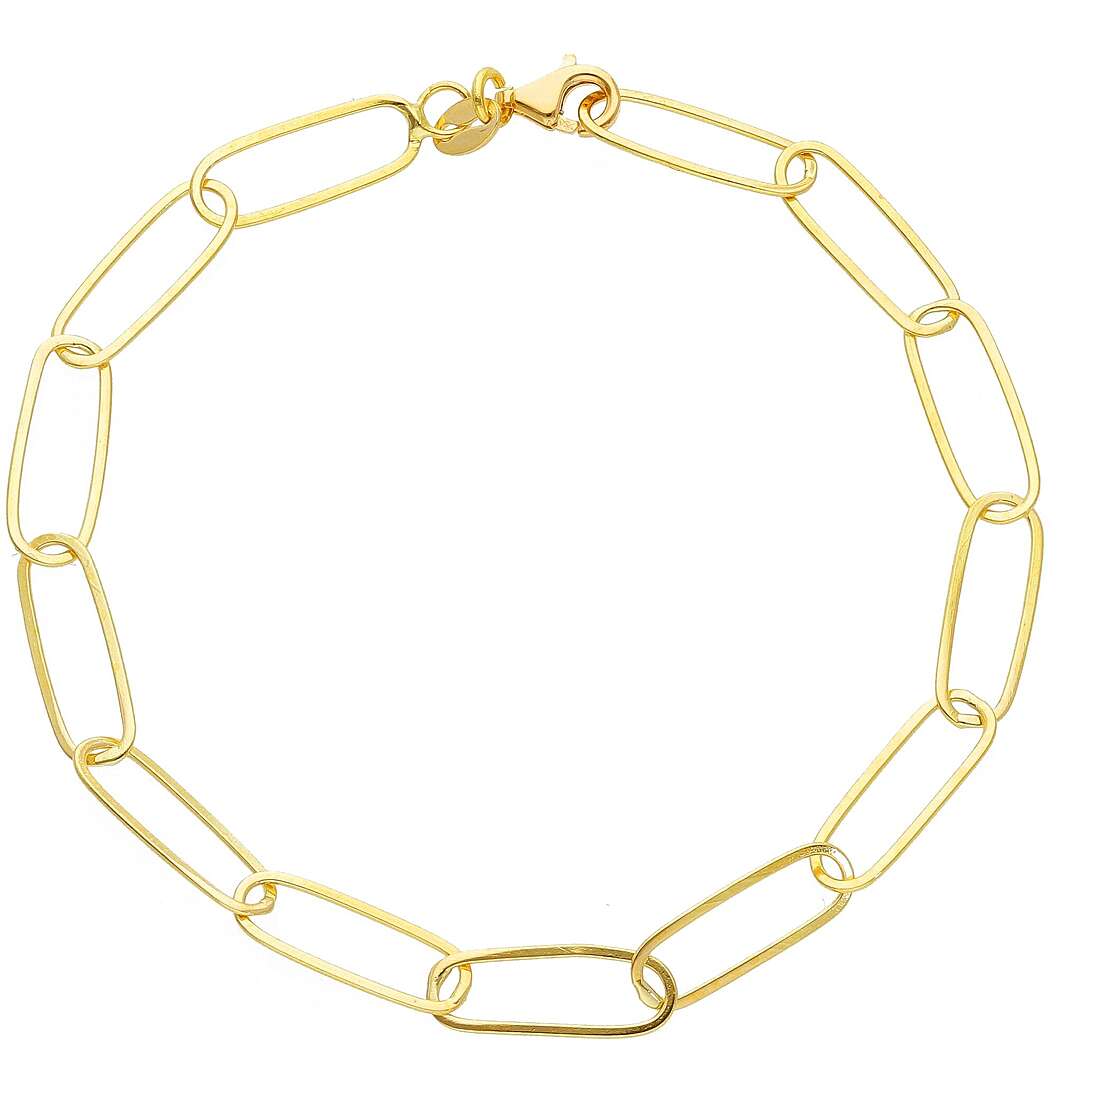 bracelet woman Chain 18 kt Gold jewel GioiaPura Oro 750 GP-S250591